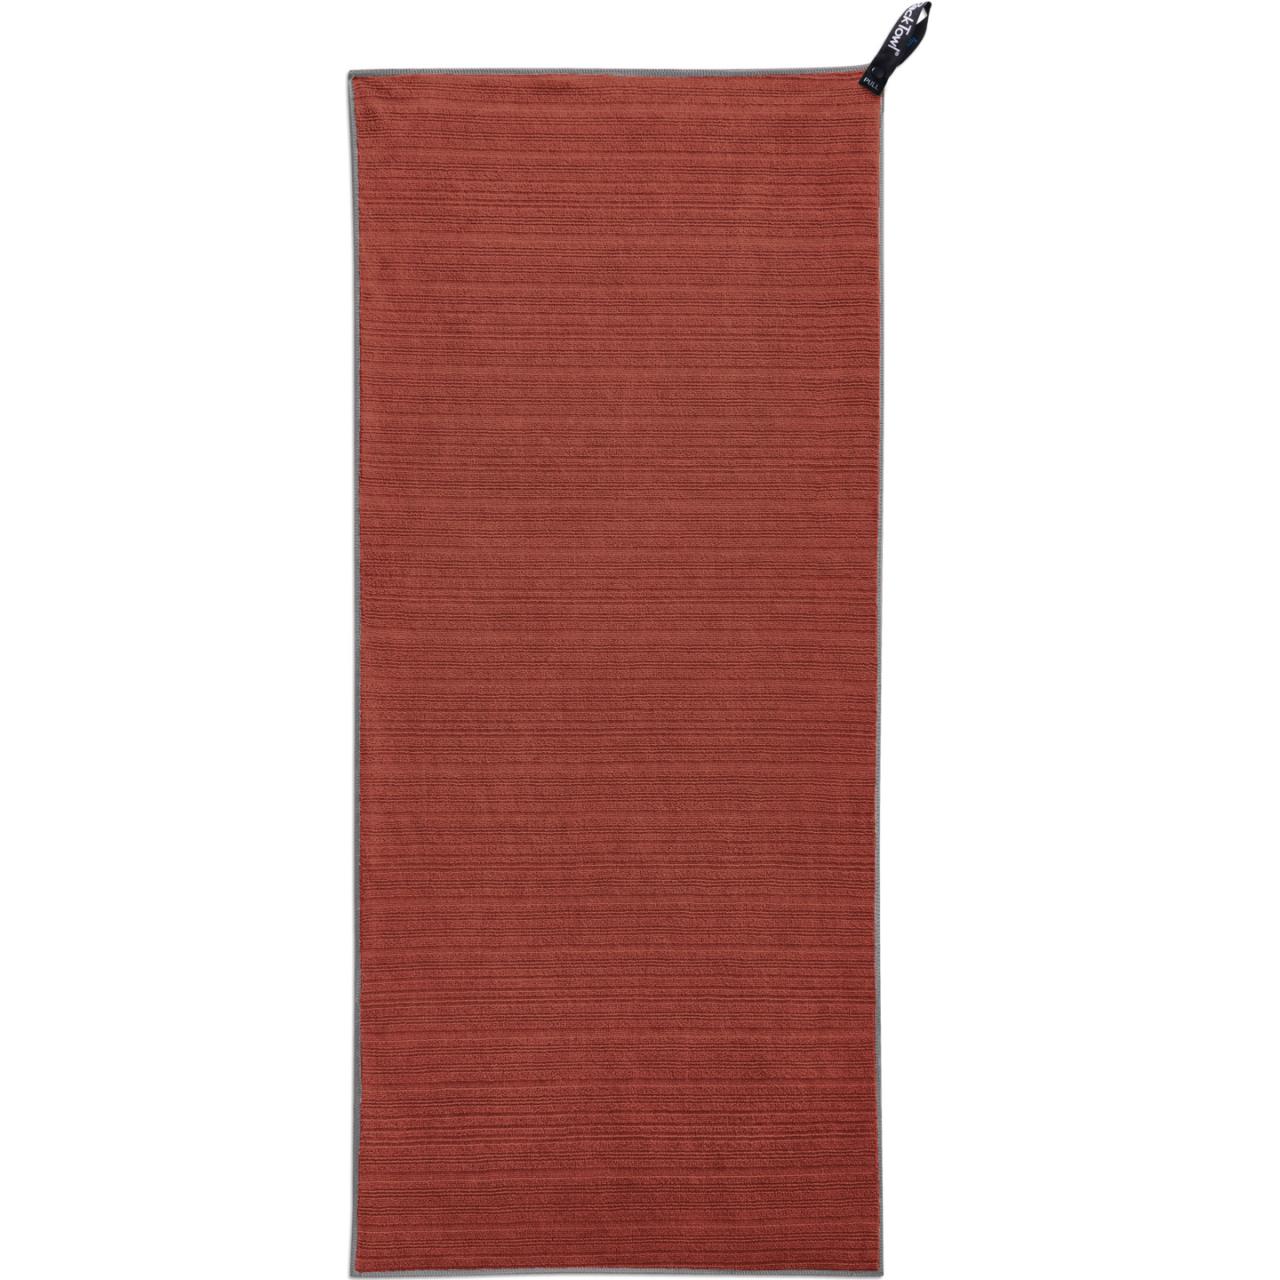 PACKTOWL LUXE TOWEL BODY Terracotta ručník 64x137 červený